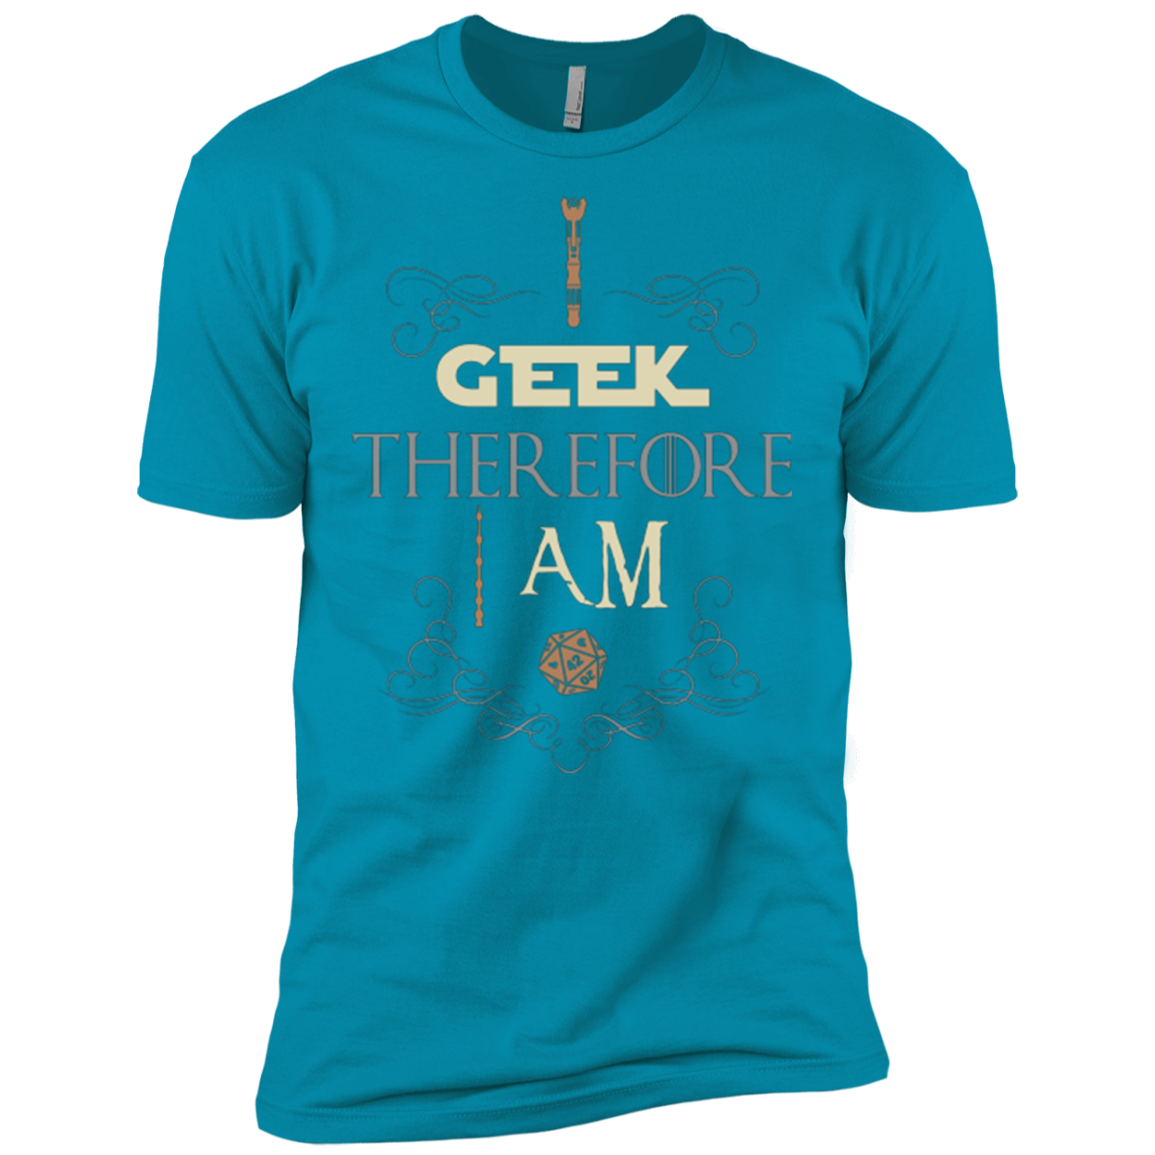 I GEEK (1) Men's Premium T-Shirt